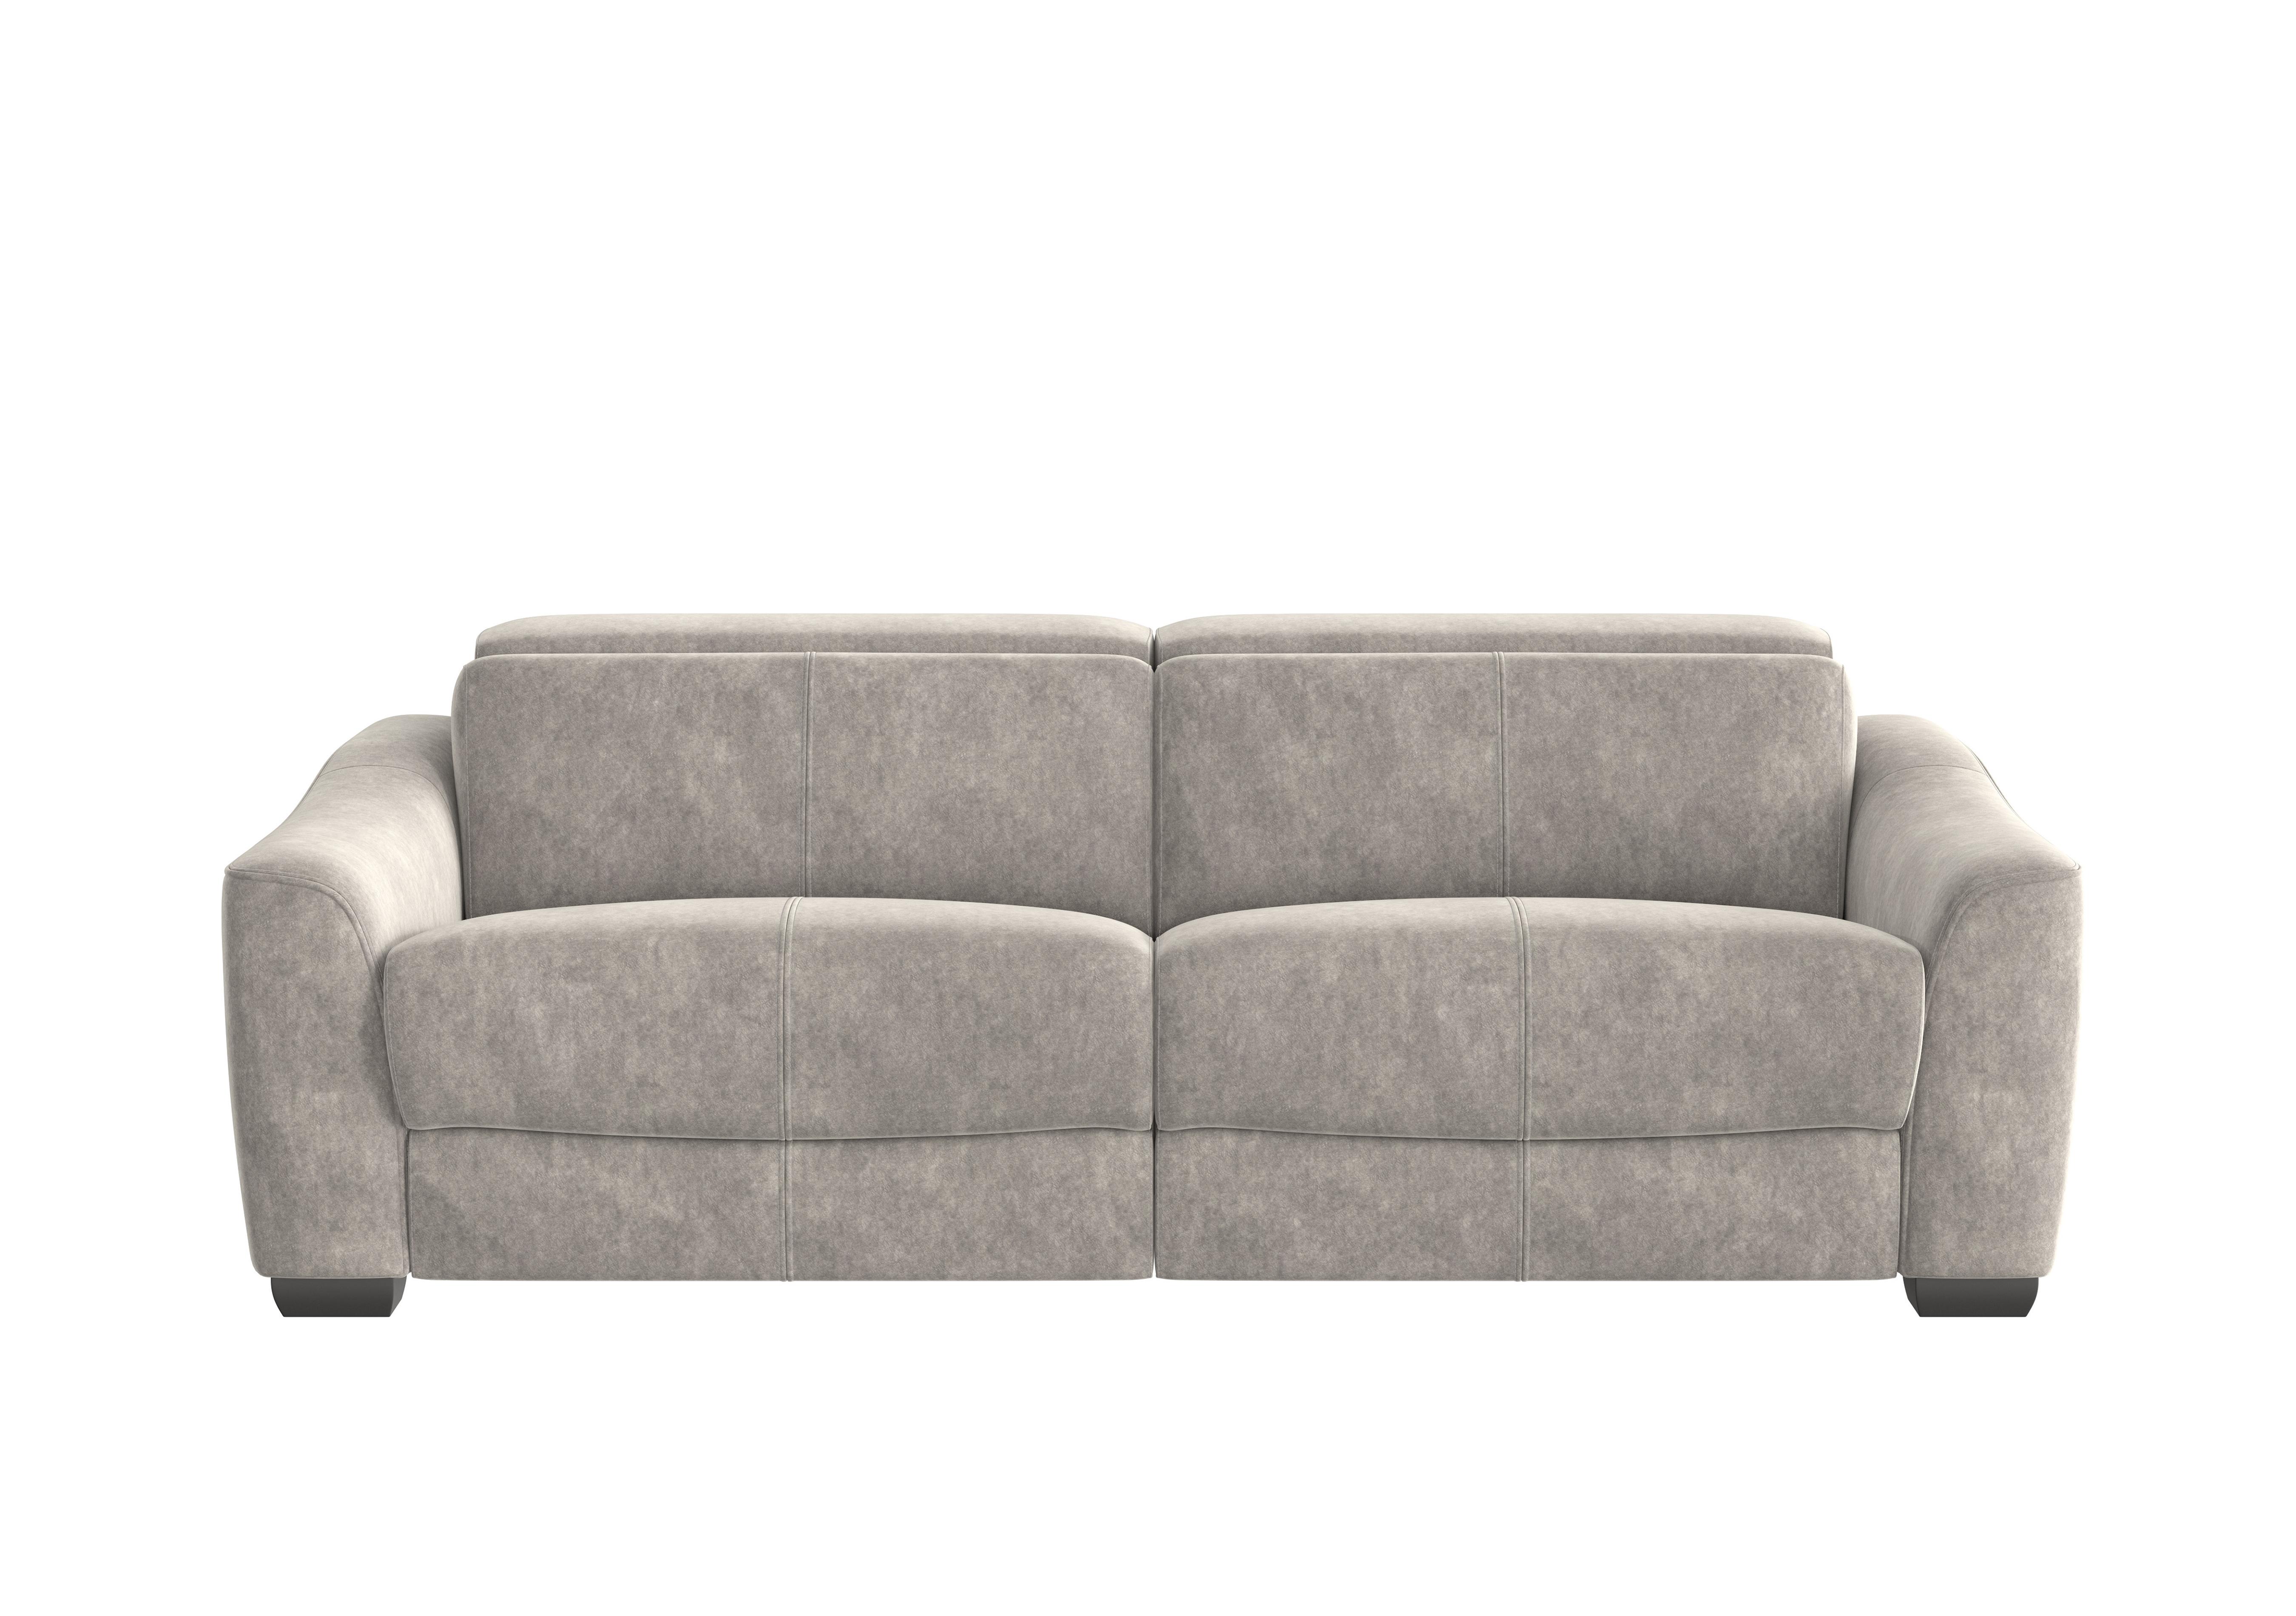 Xavier 3 Seater Fabric Sofa in Bfa-Bnn-R28 Grey on Furniture Village